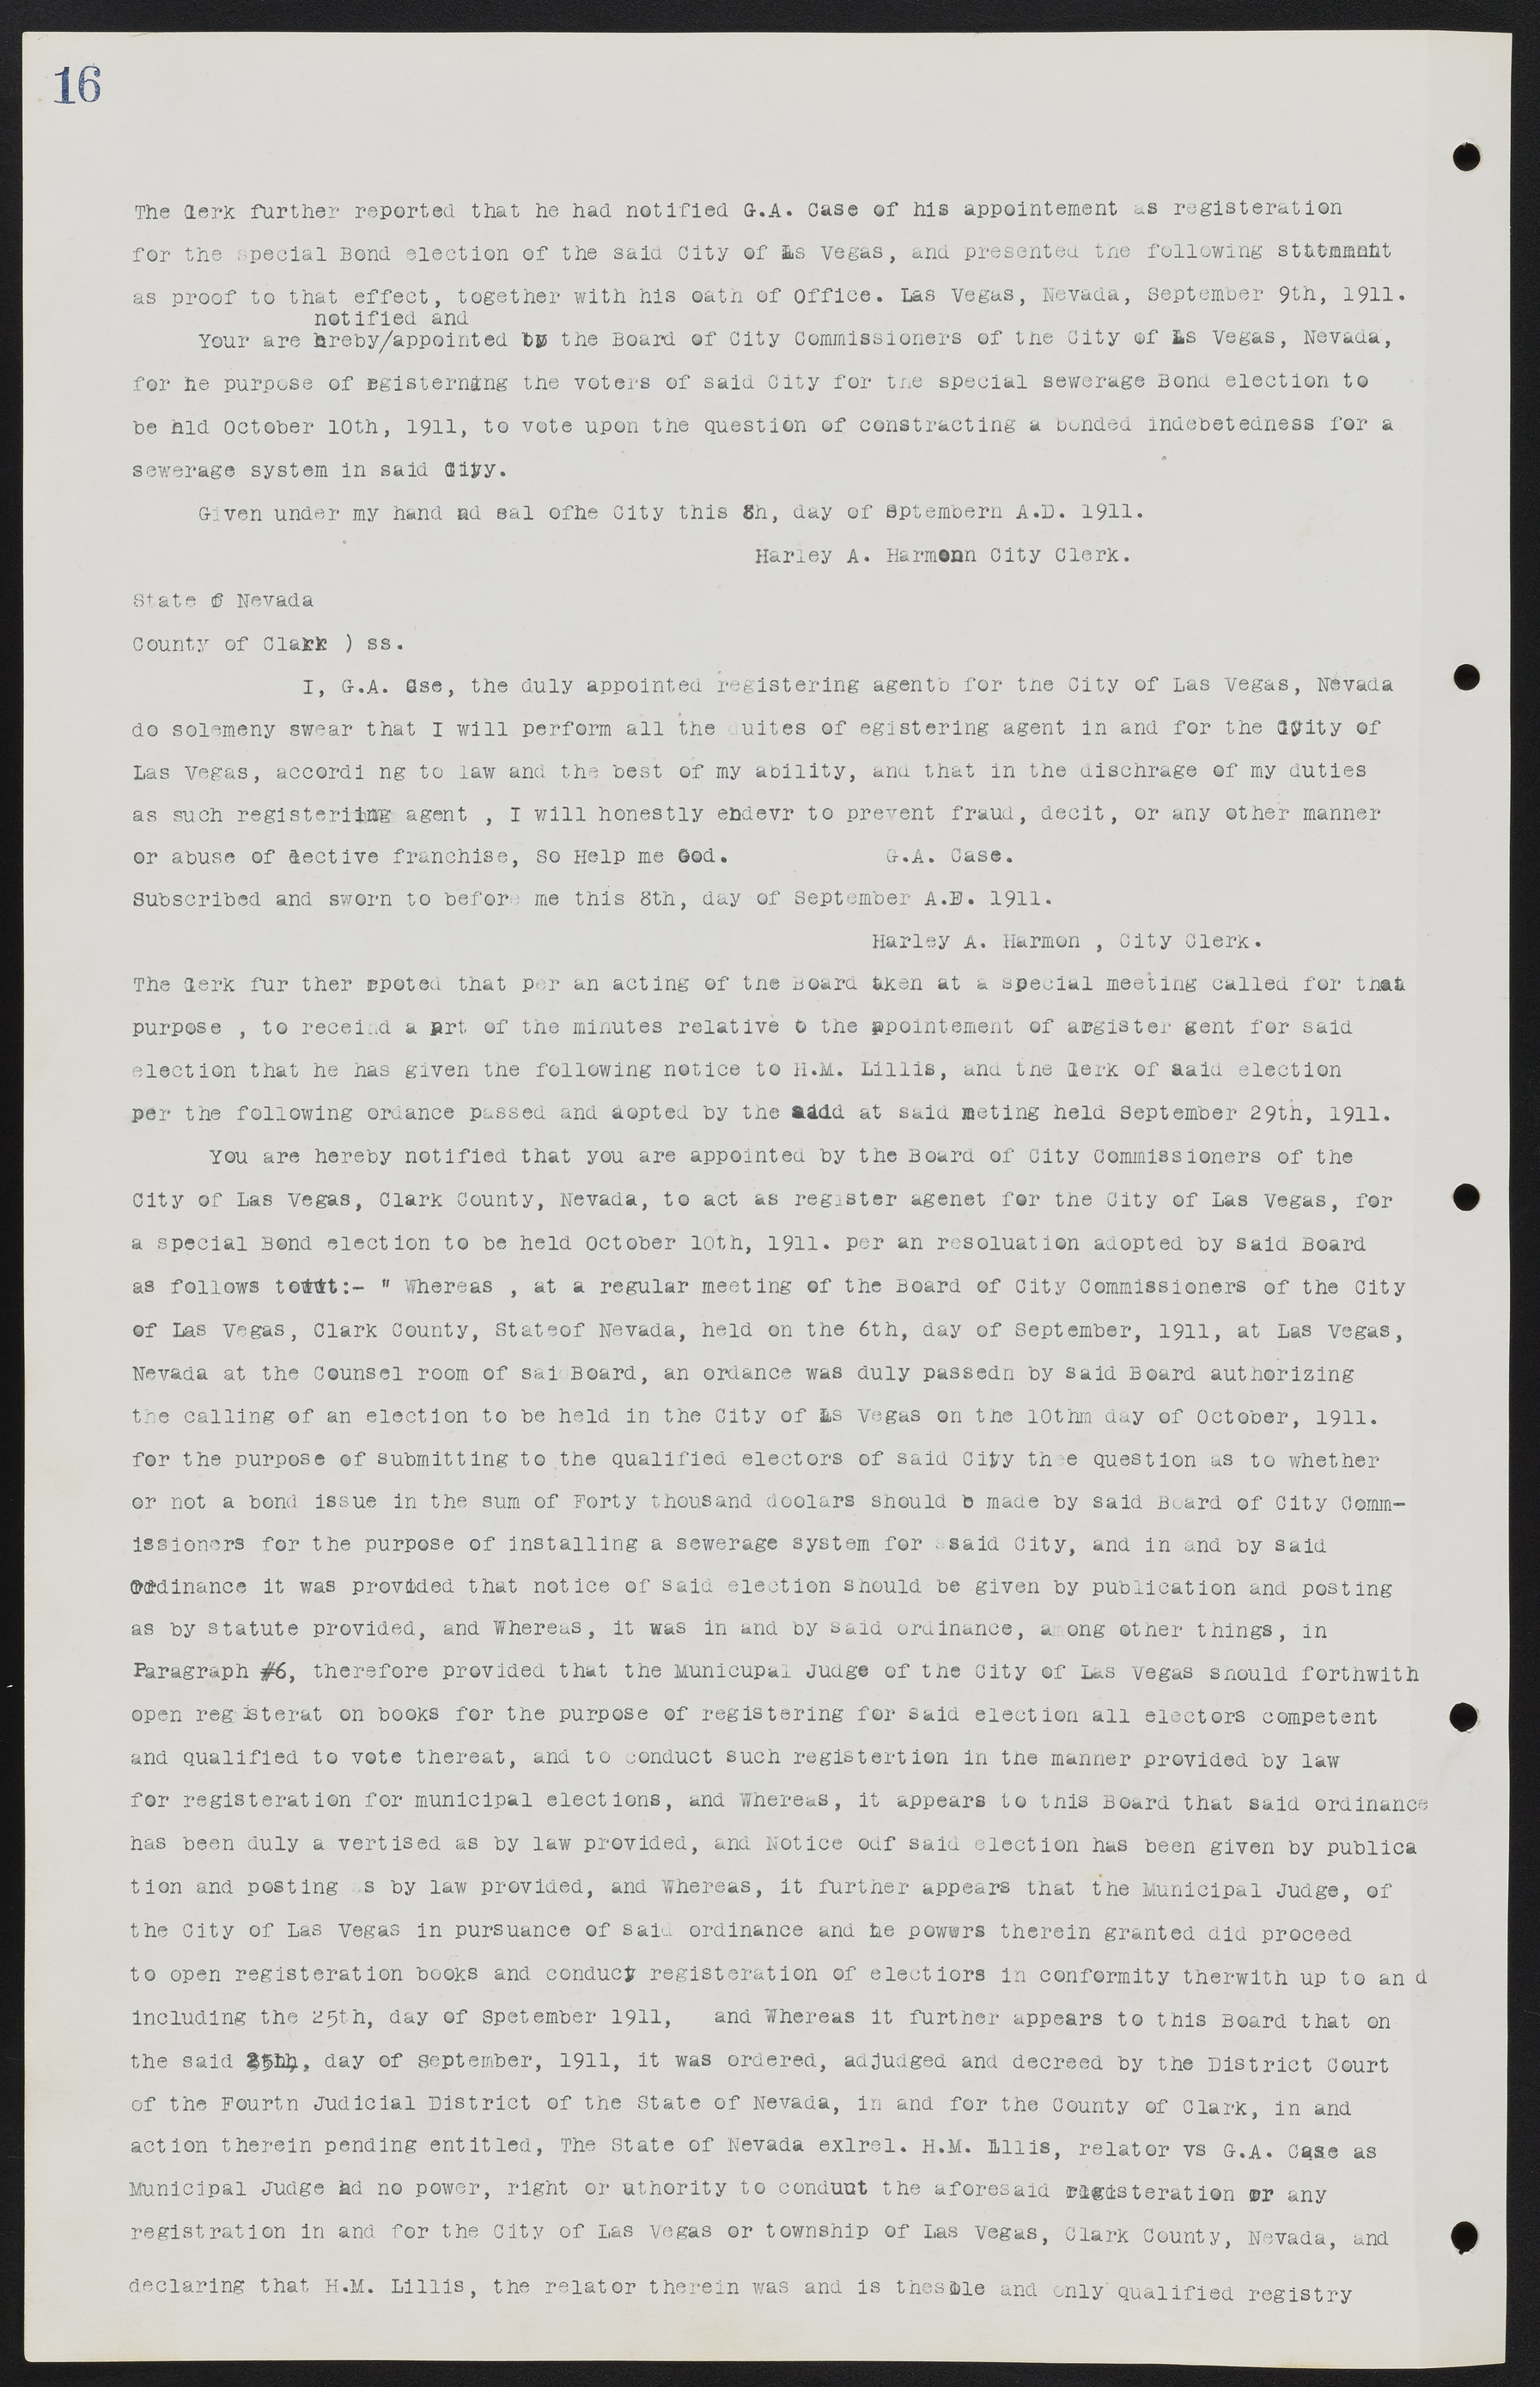 Las Vegas City Commission Minutes, June 22, 1911 to February 7, 1922, lvc000001-30